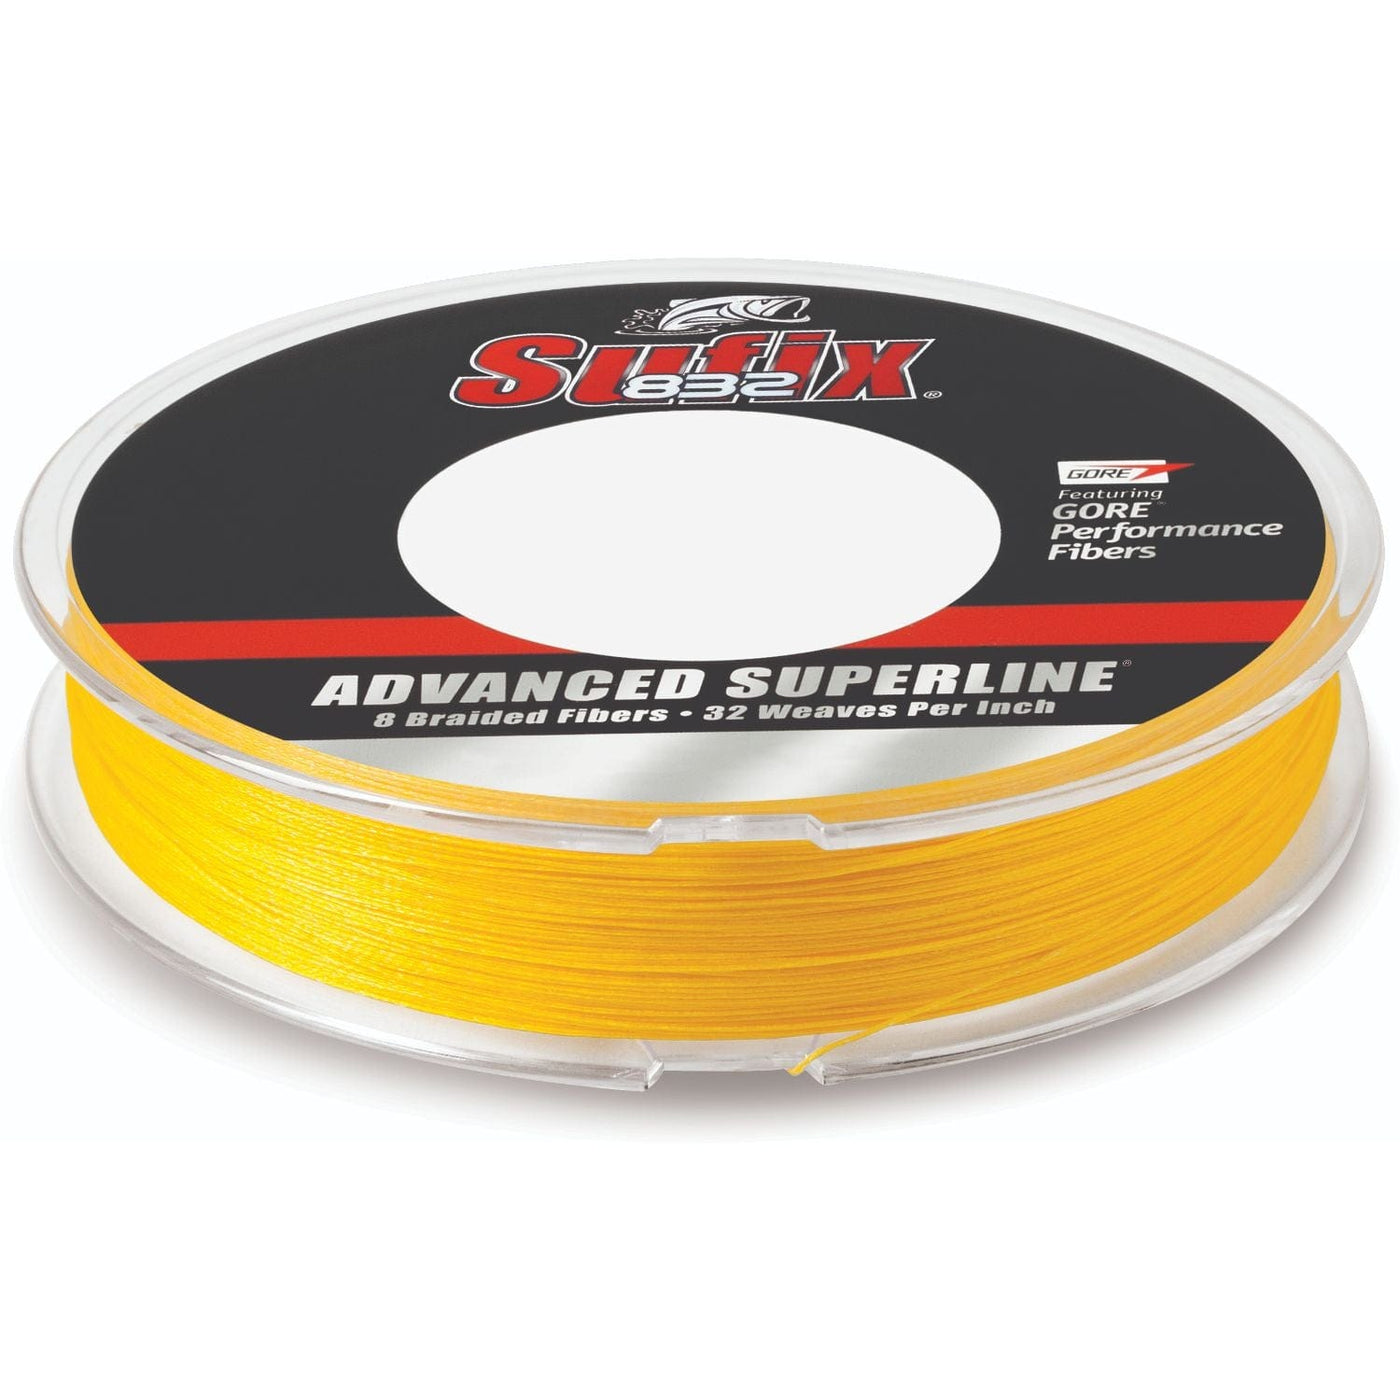 Sufix Sufix Advanced Superline 832 Braid lb 300 300 yards / 6 lb / Hi-Vis Yellow Fishing